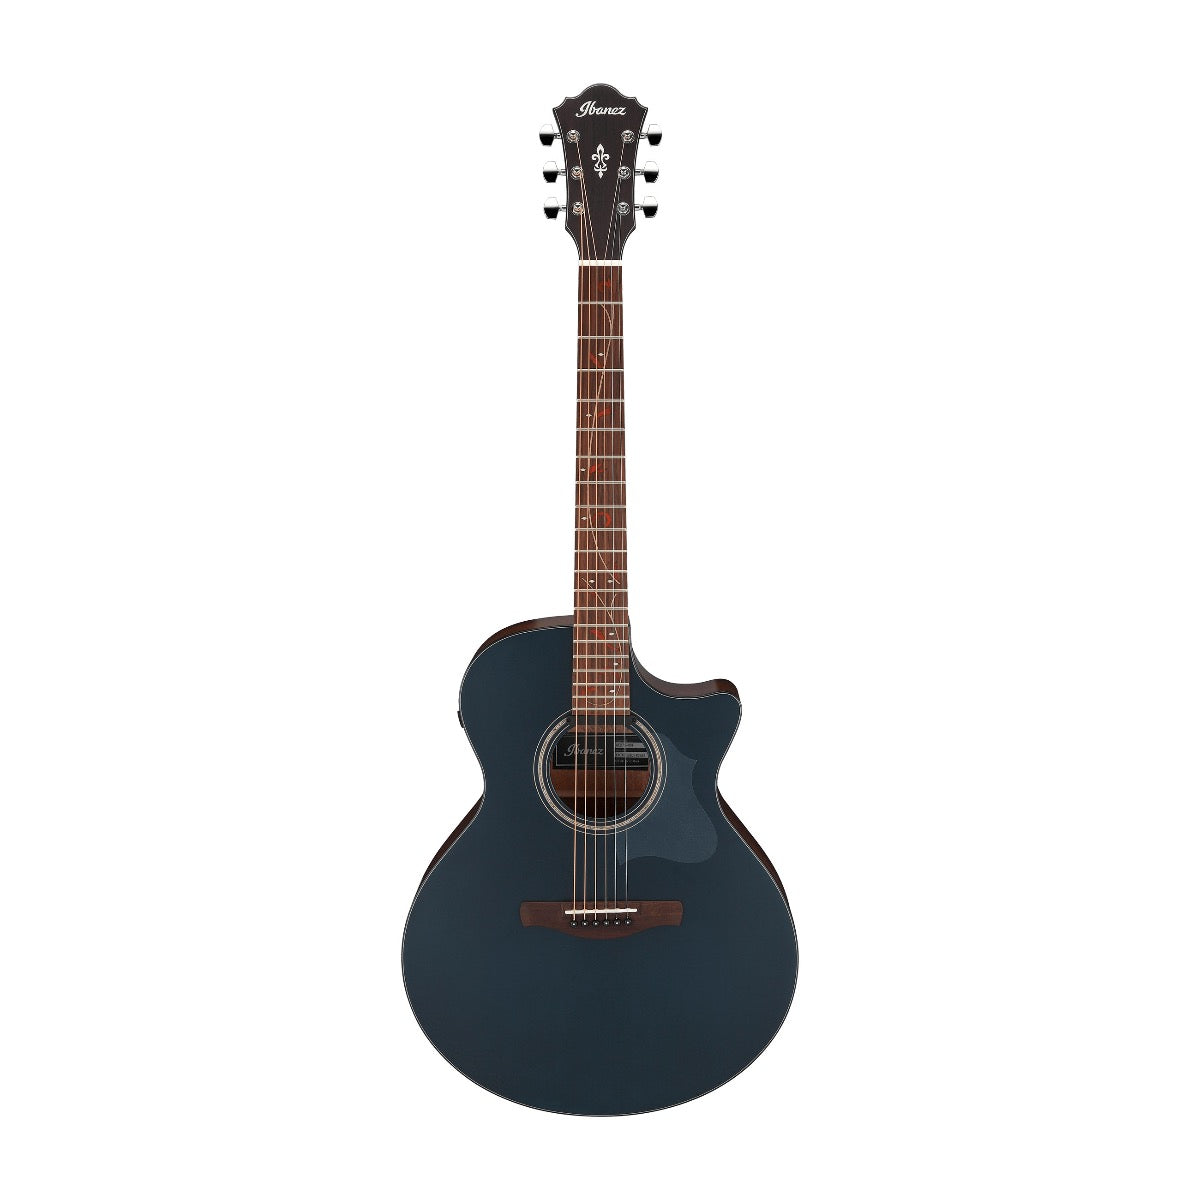 Ibanez AE275 Acoustic Electric Guitar - Dark Tide Blue Flat, View 2